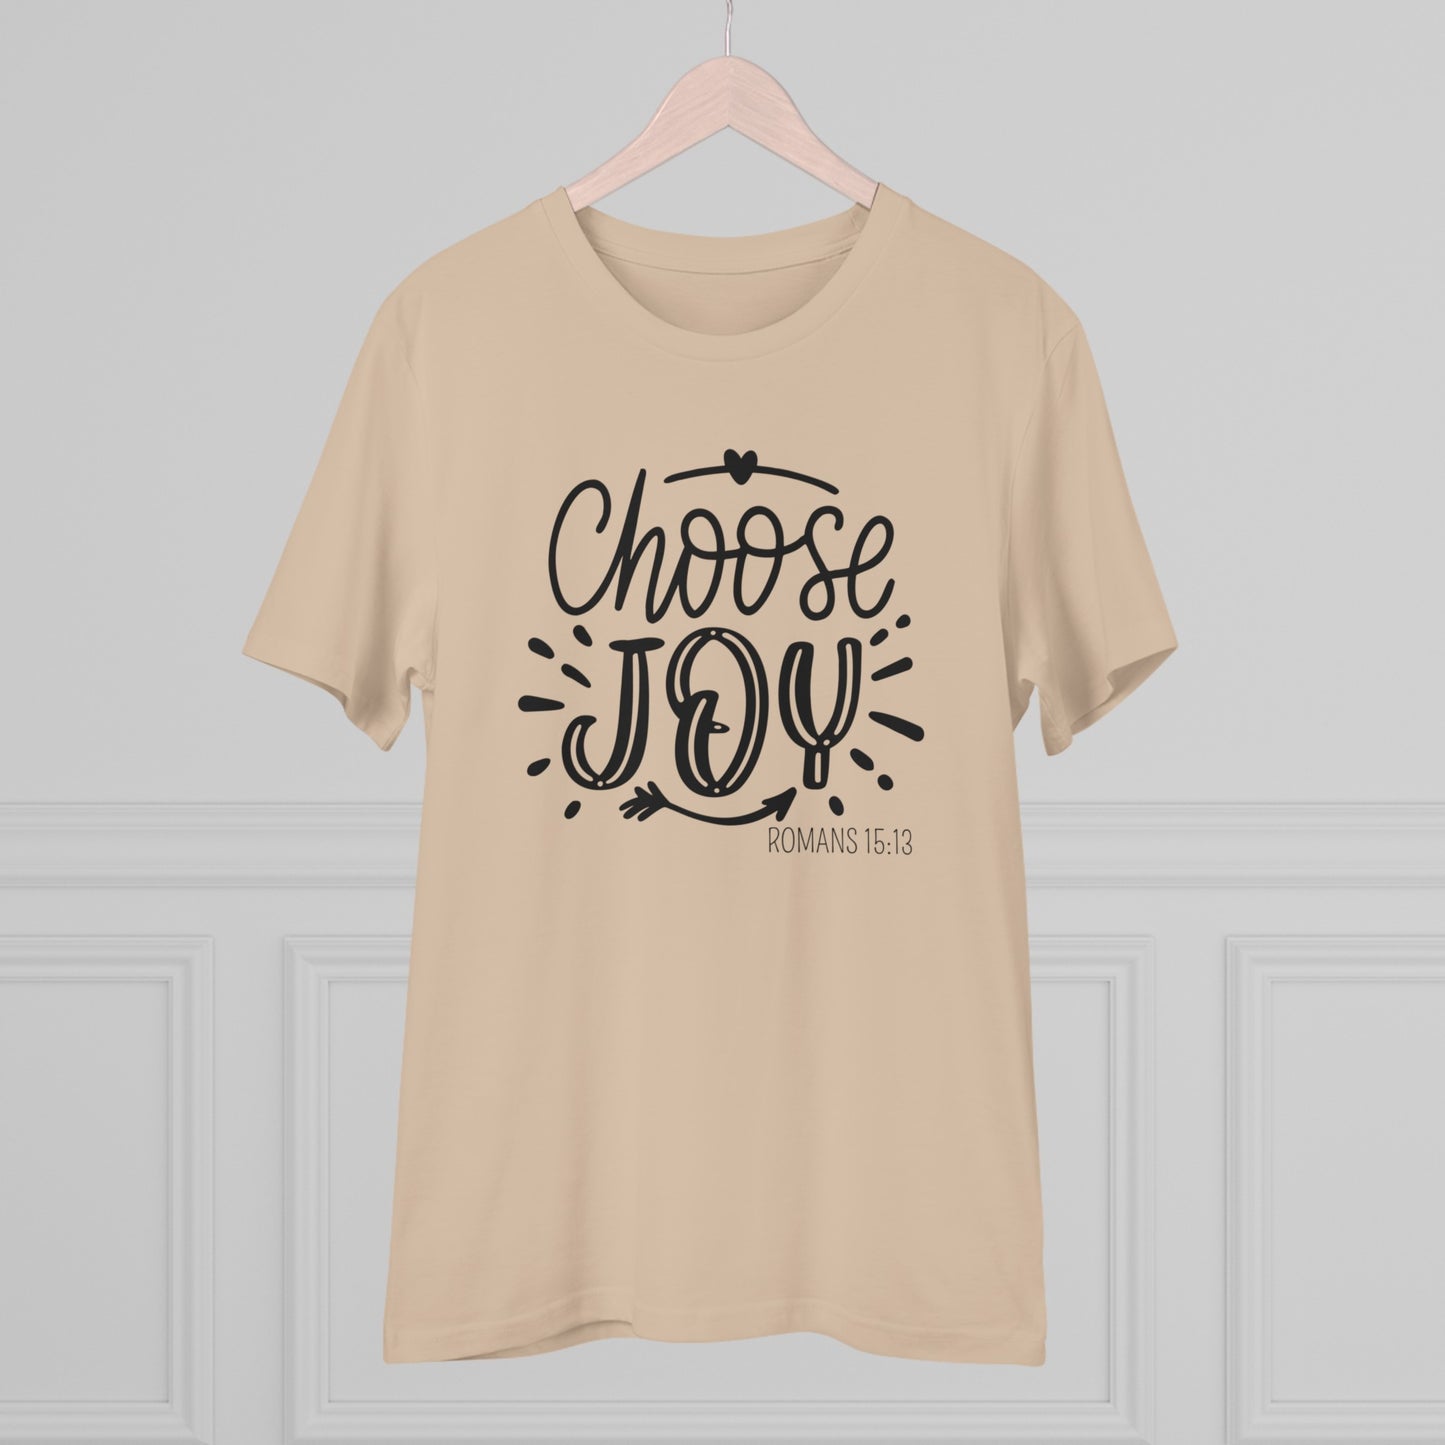 Choose Joy - Romans 15:13 - Organic Unisex T-shirt